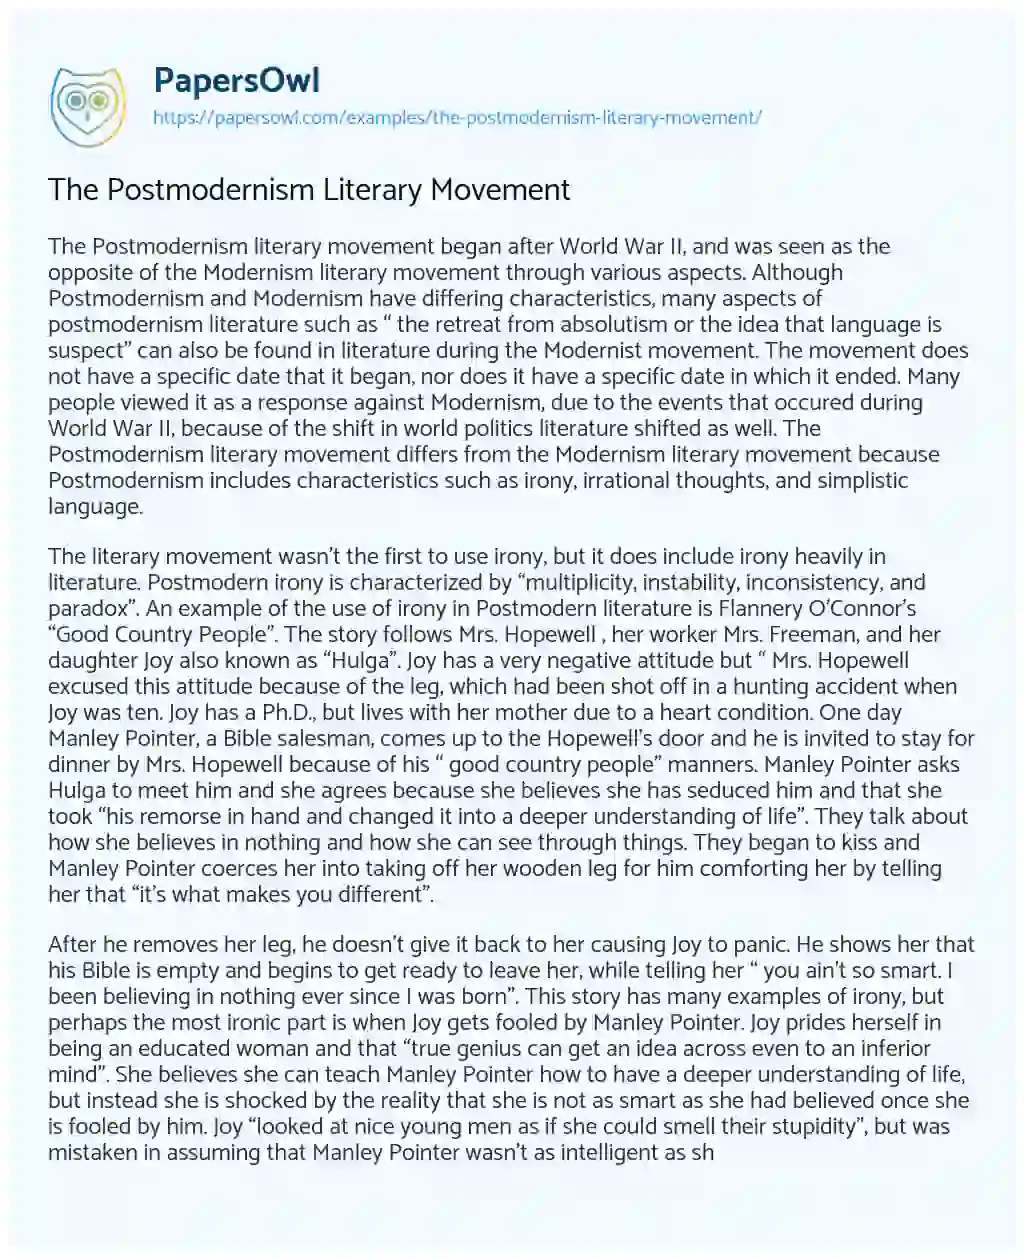 Essay on The Postmodernism Literary Movement